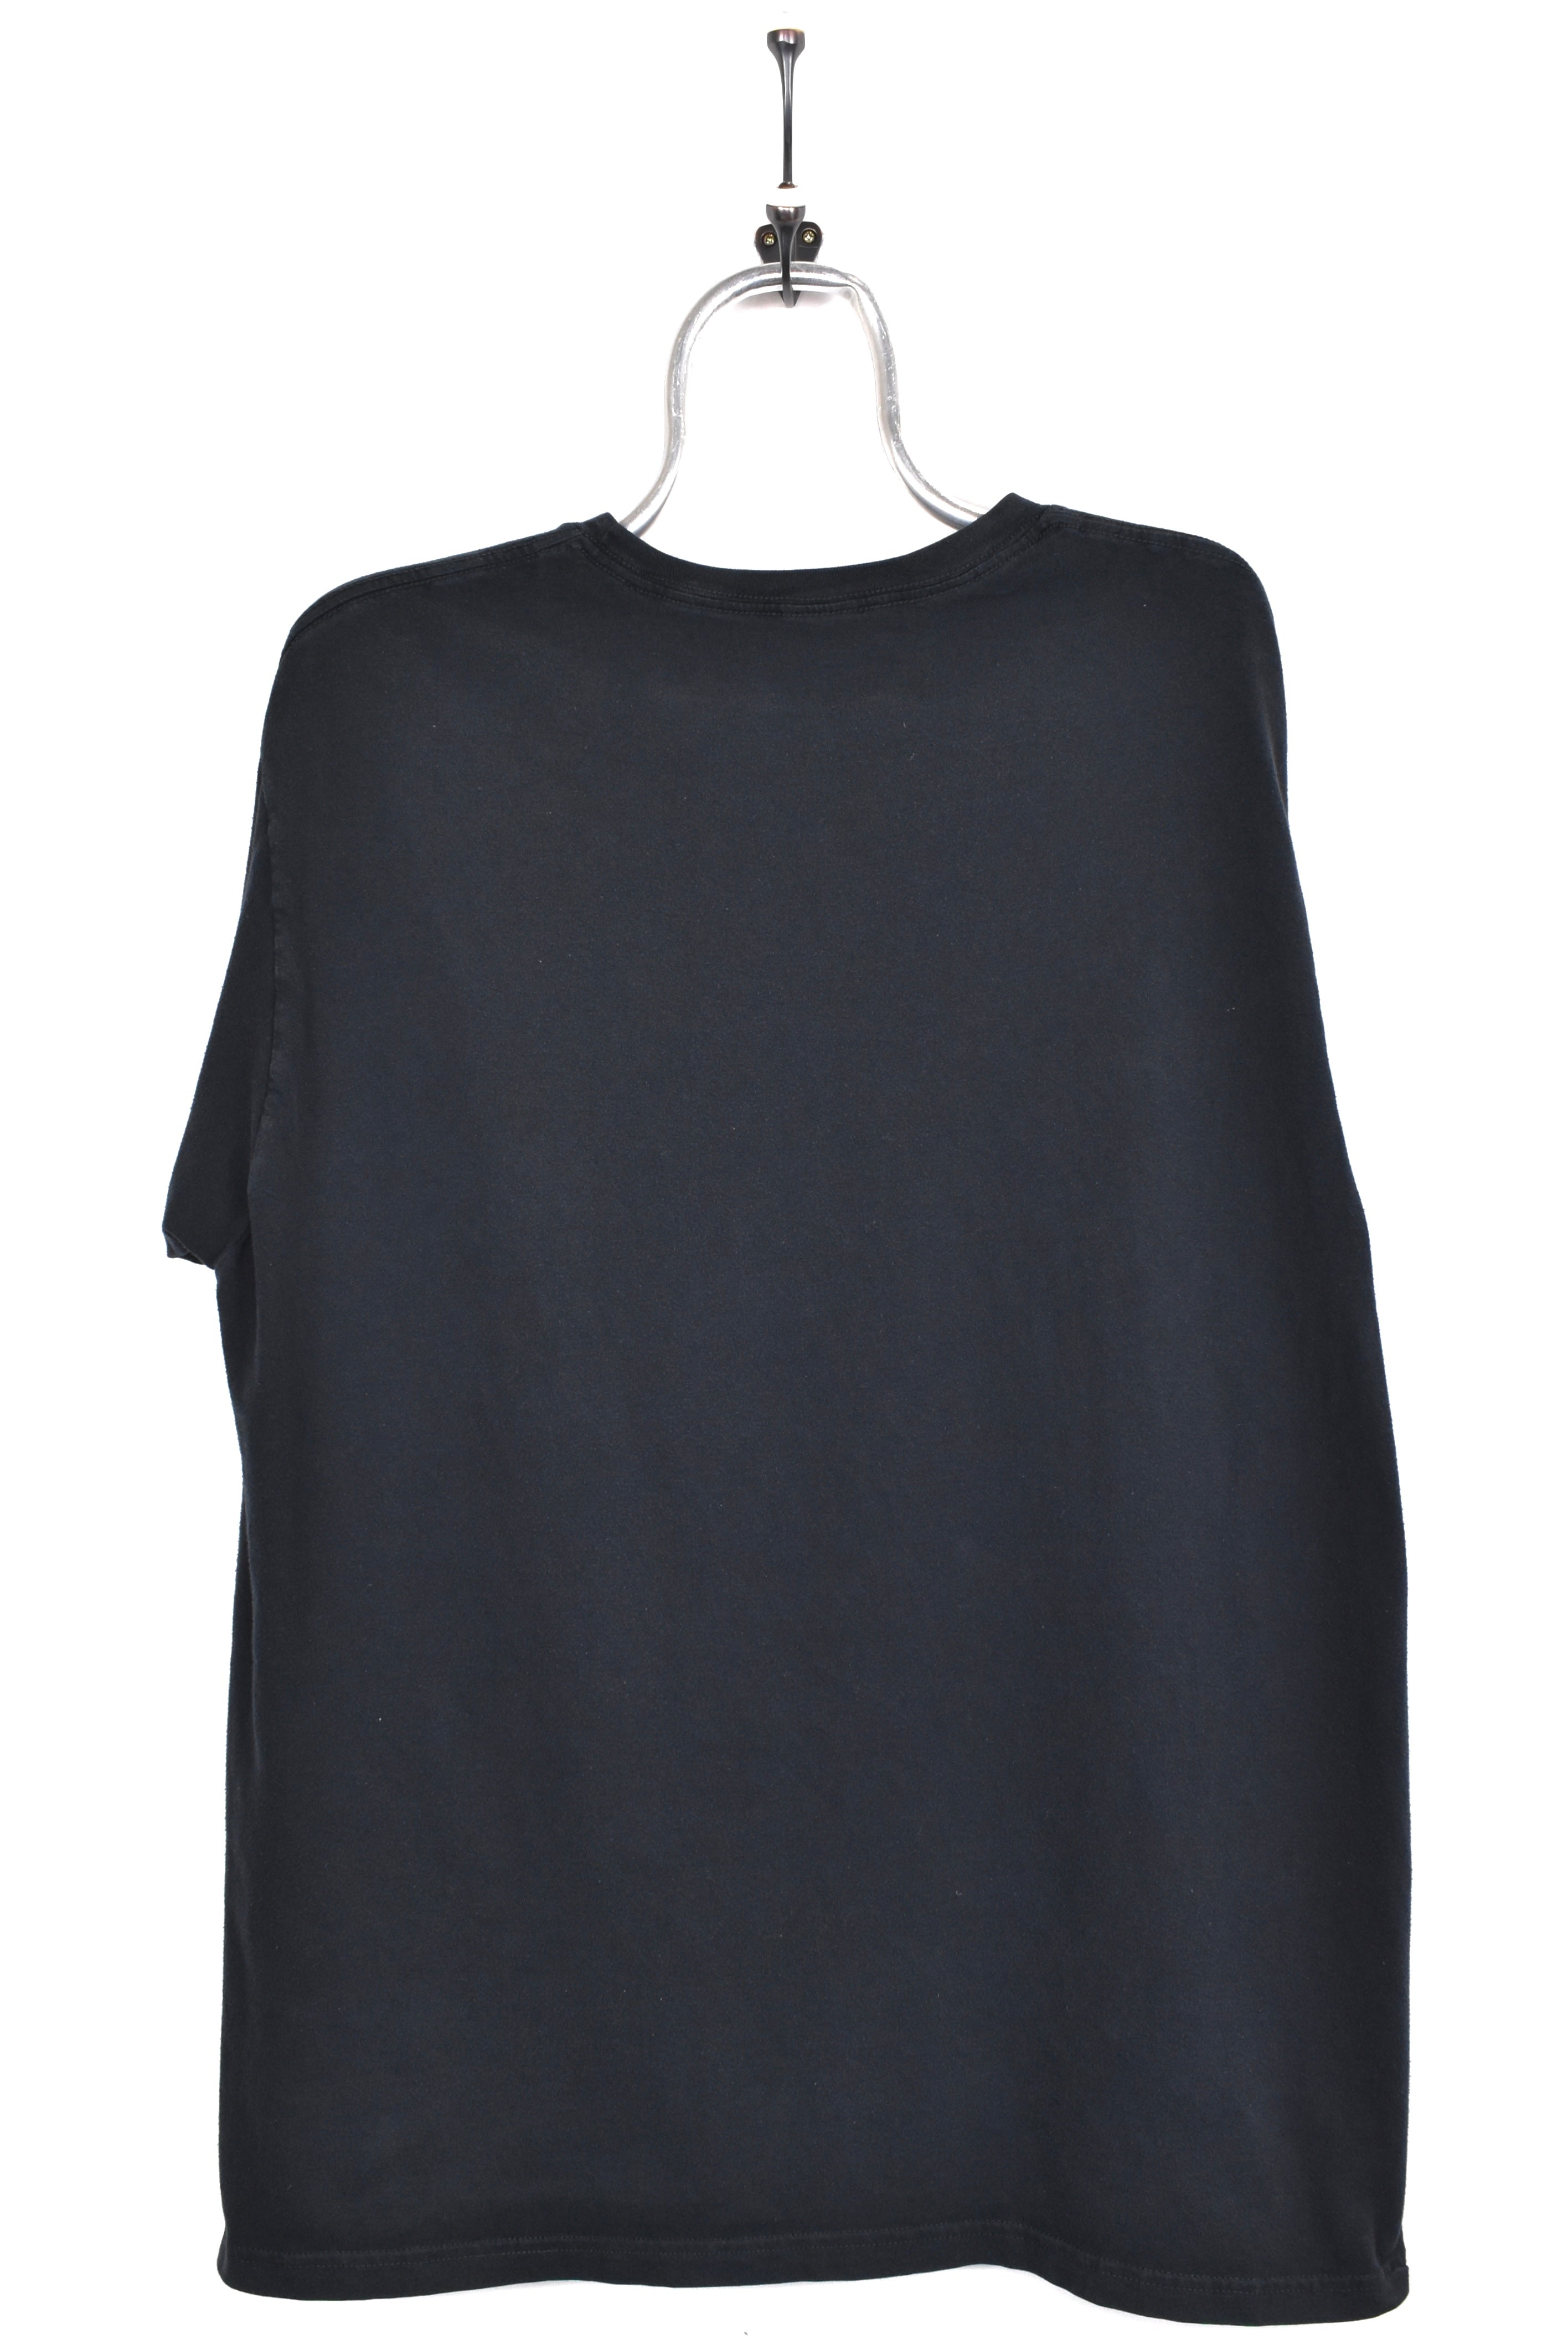 Modern Levis shirt, short sleeve black graphic tee - AU L LEVIS